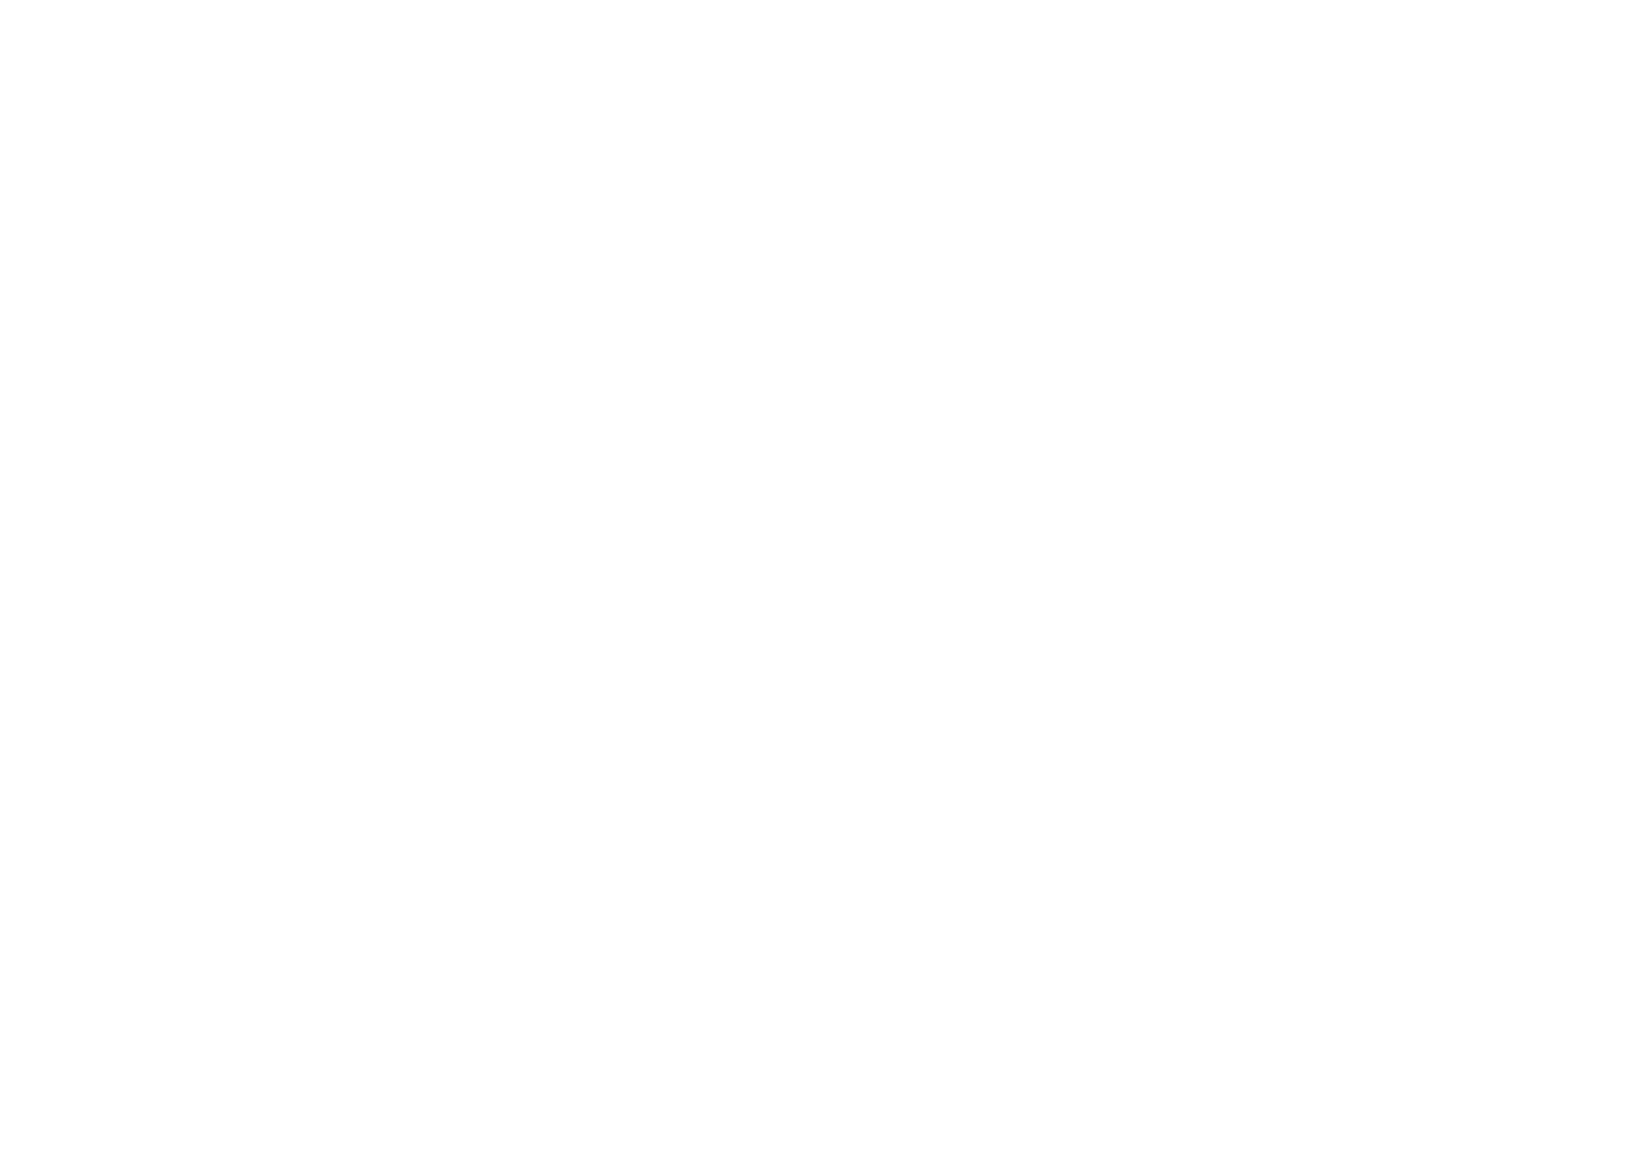 Instinct Dog Behavior & Training